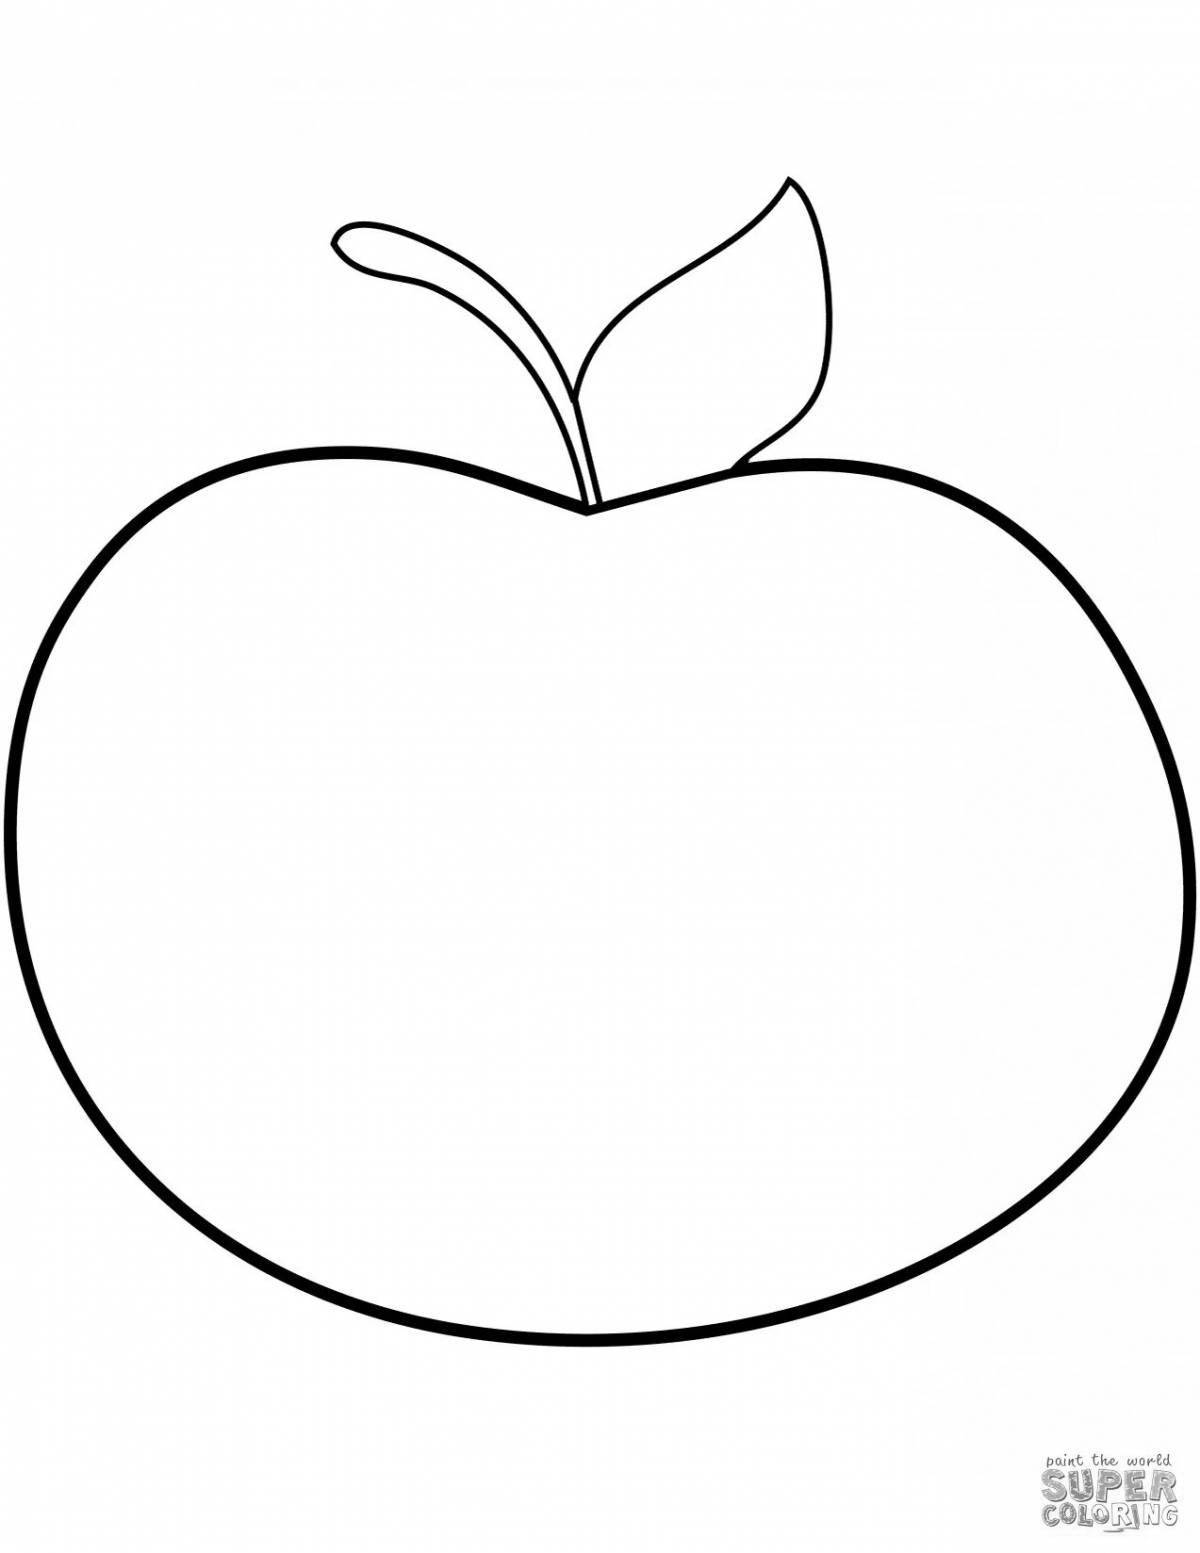 Fruit apple on a plate